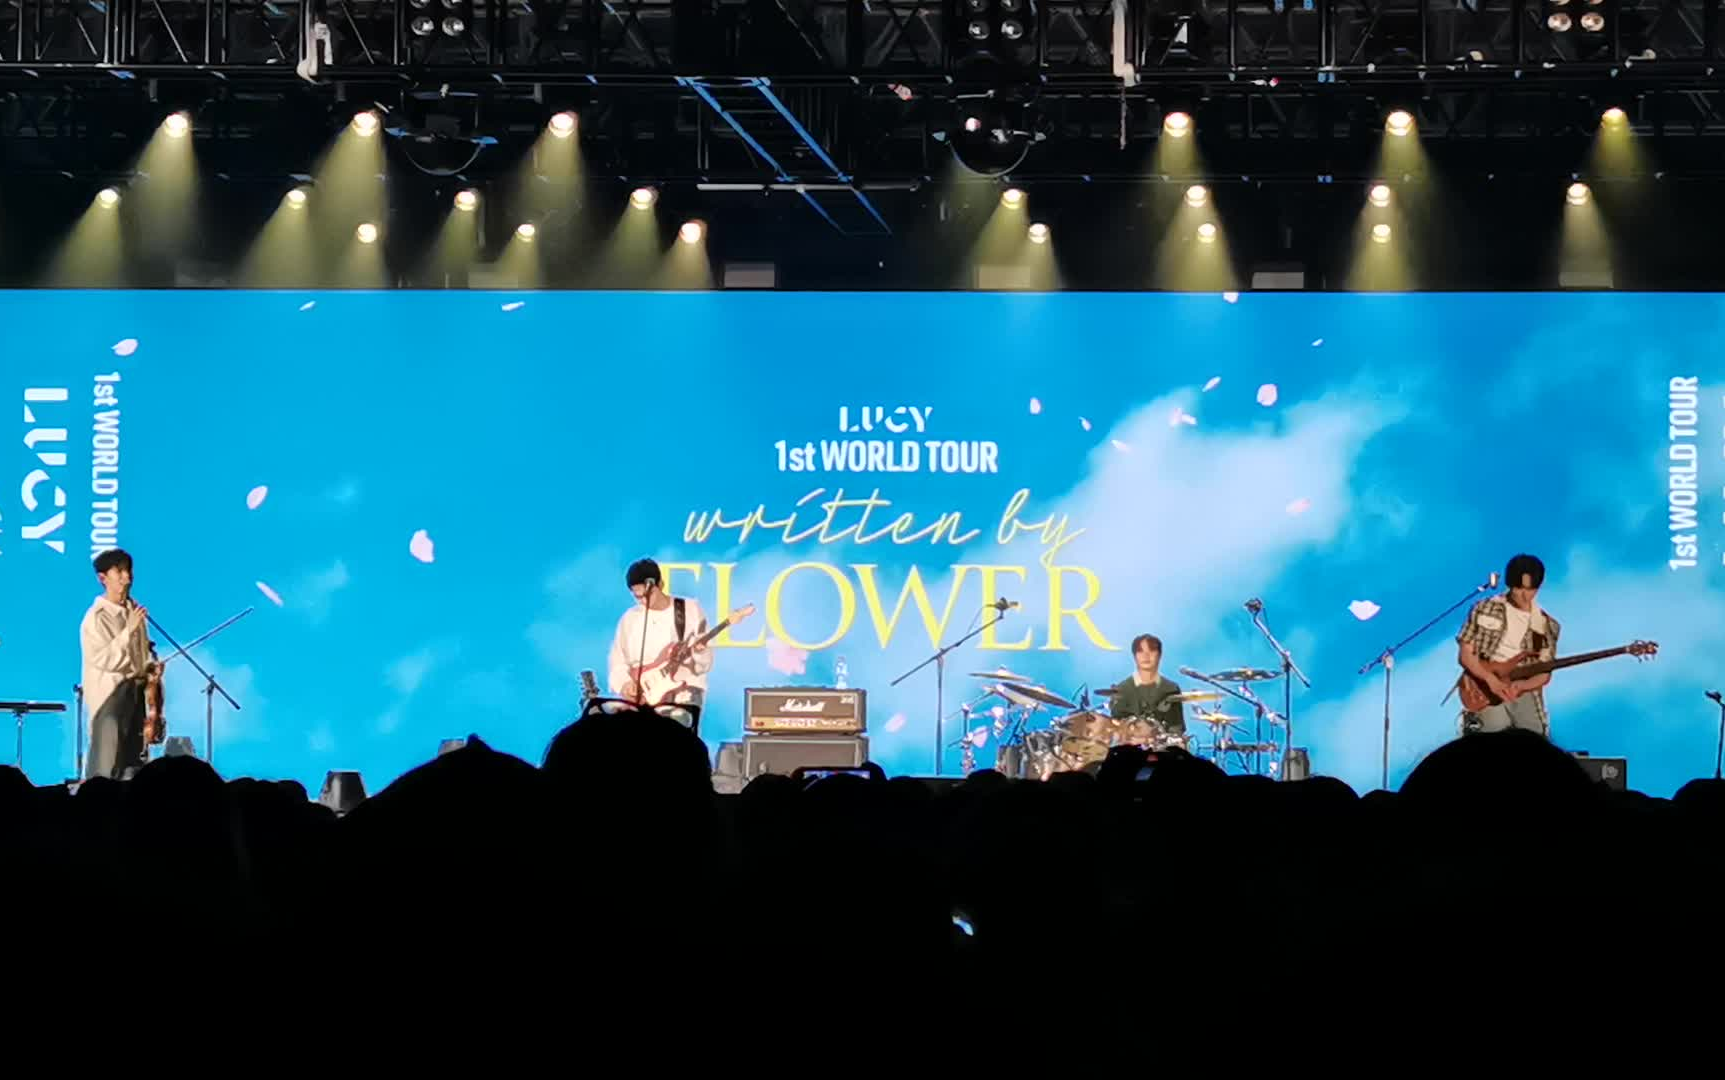 【LUCY】240406 LUCY 1st WORLD TOUR in Macau 一点饭拍